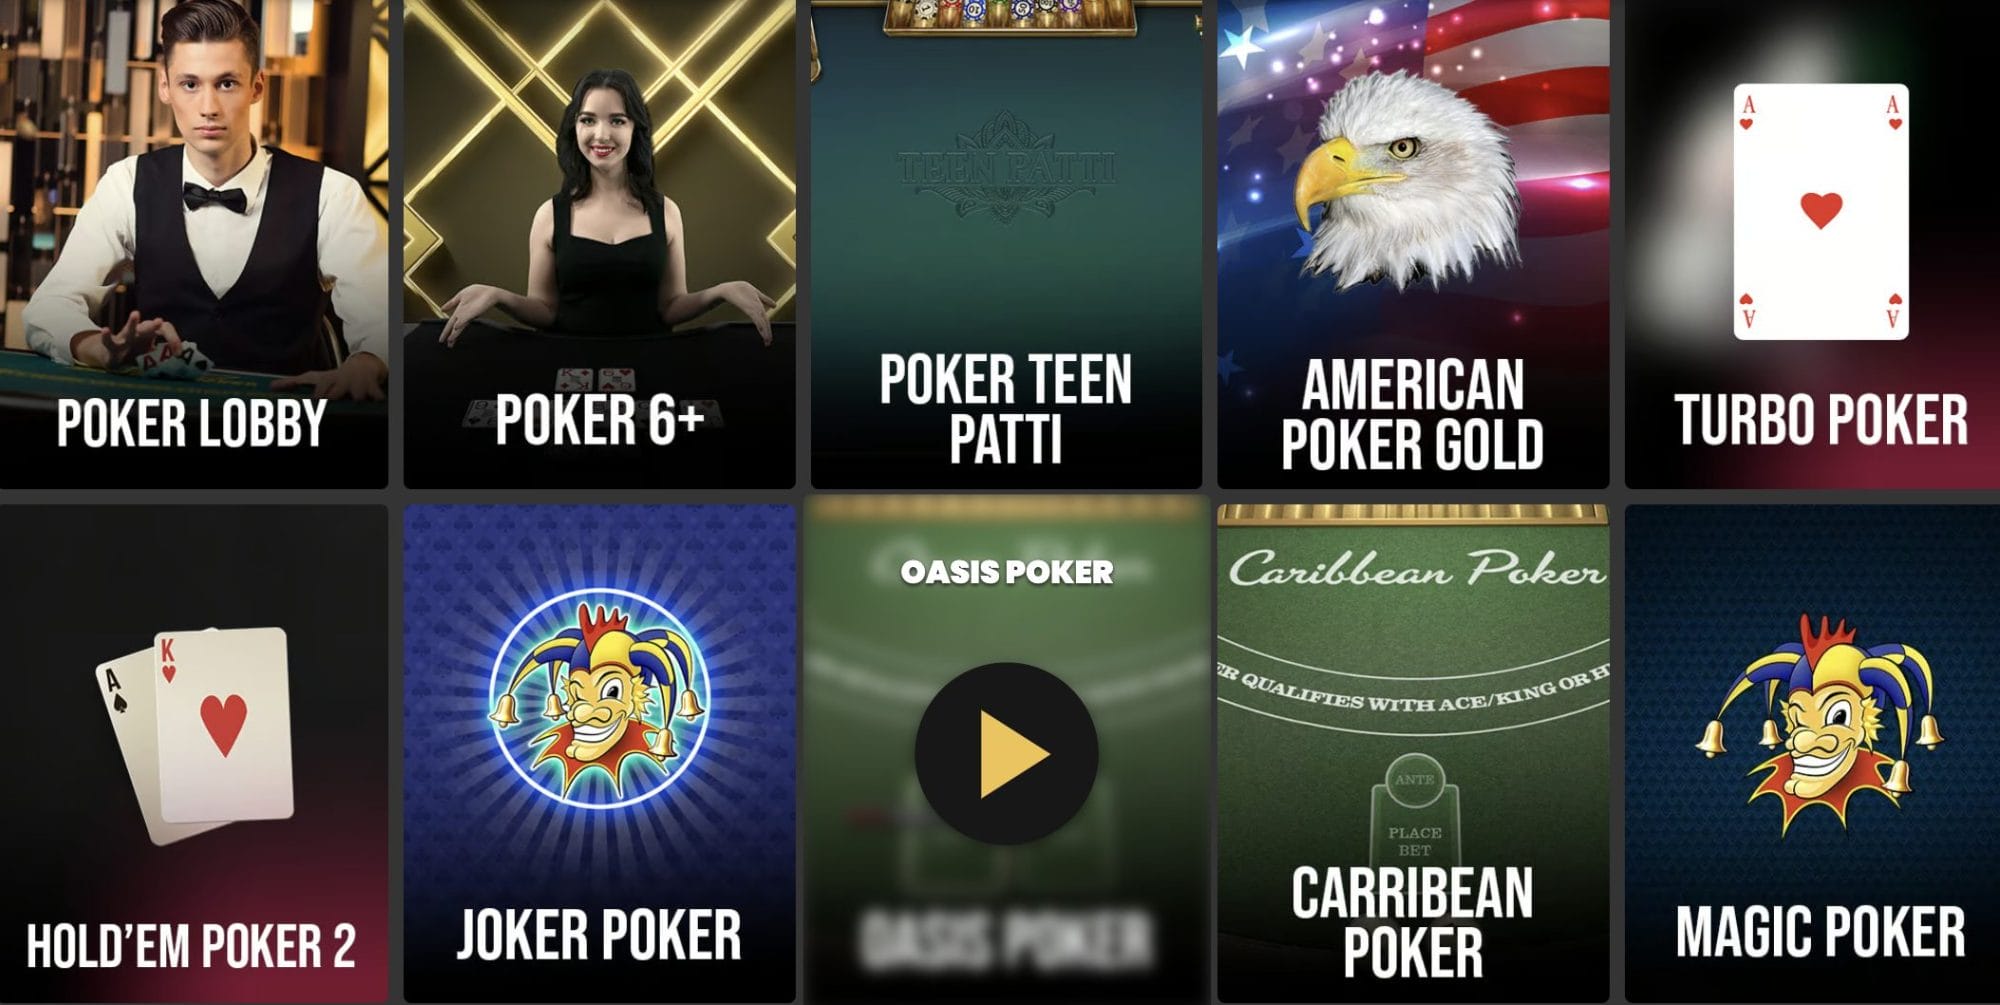 Video poker at a Litecoin casino site 